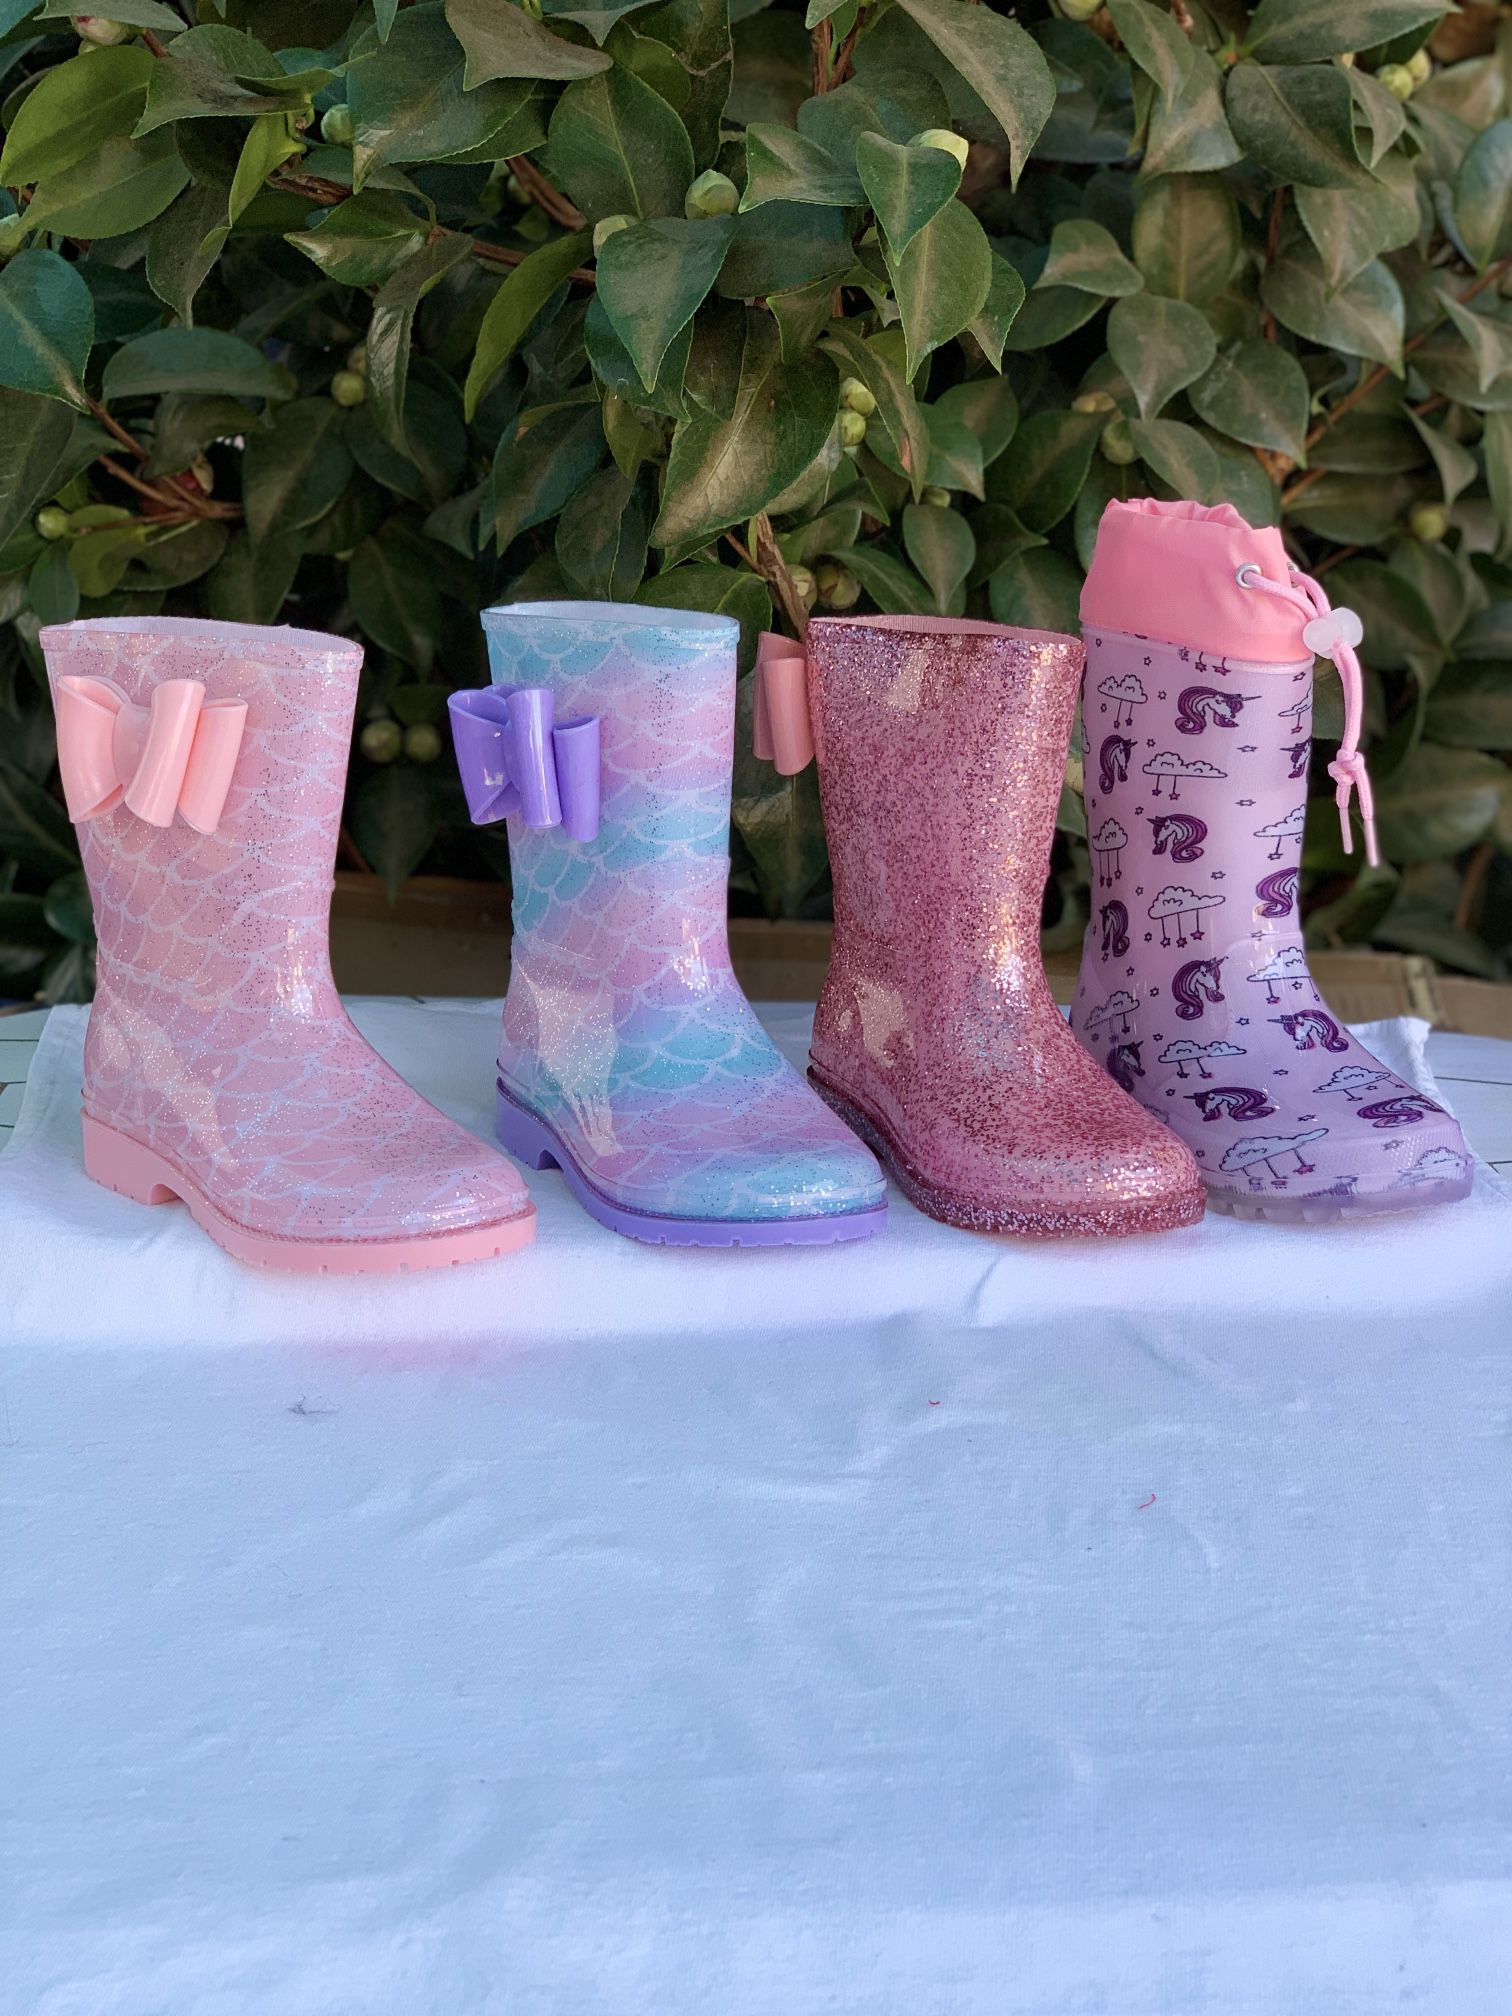 Rain Boots For Kids Sizes 11.12.13.1.2.3.4 $20 Each Pair